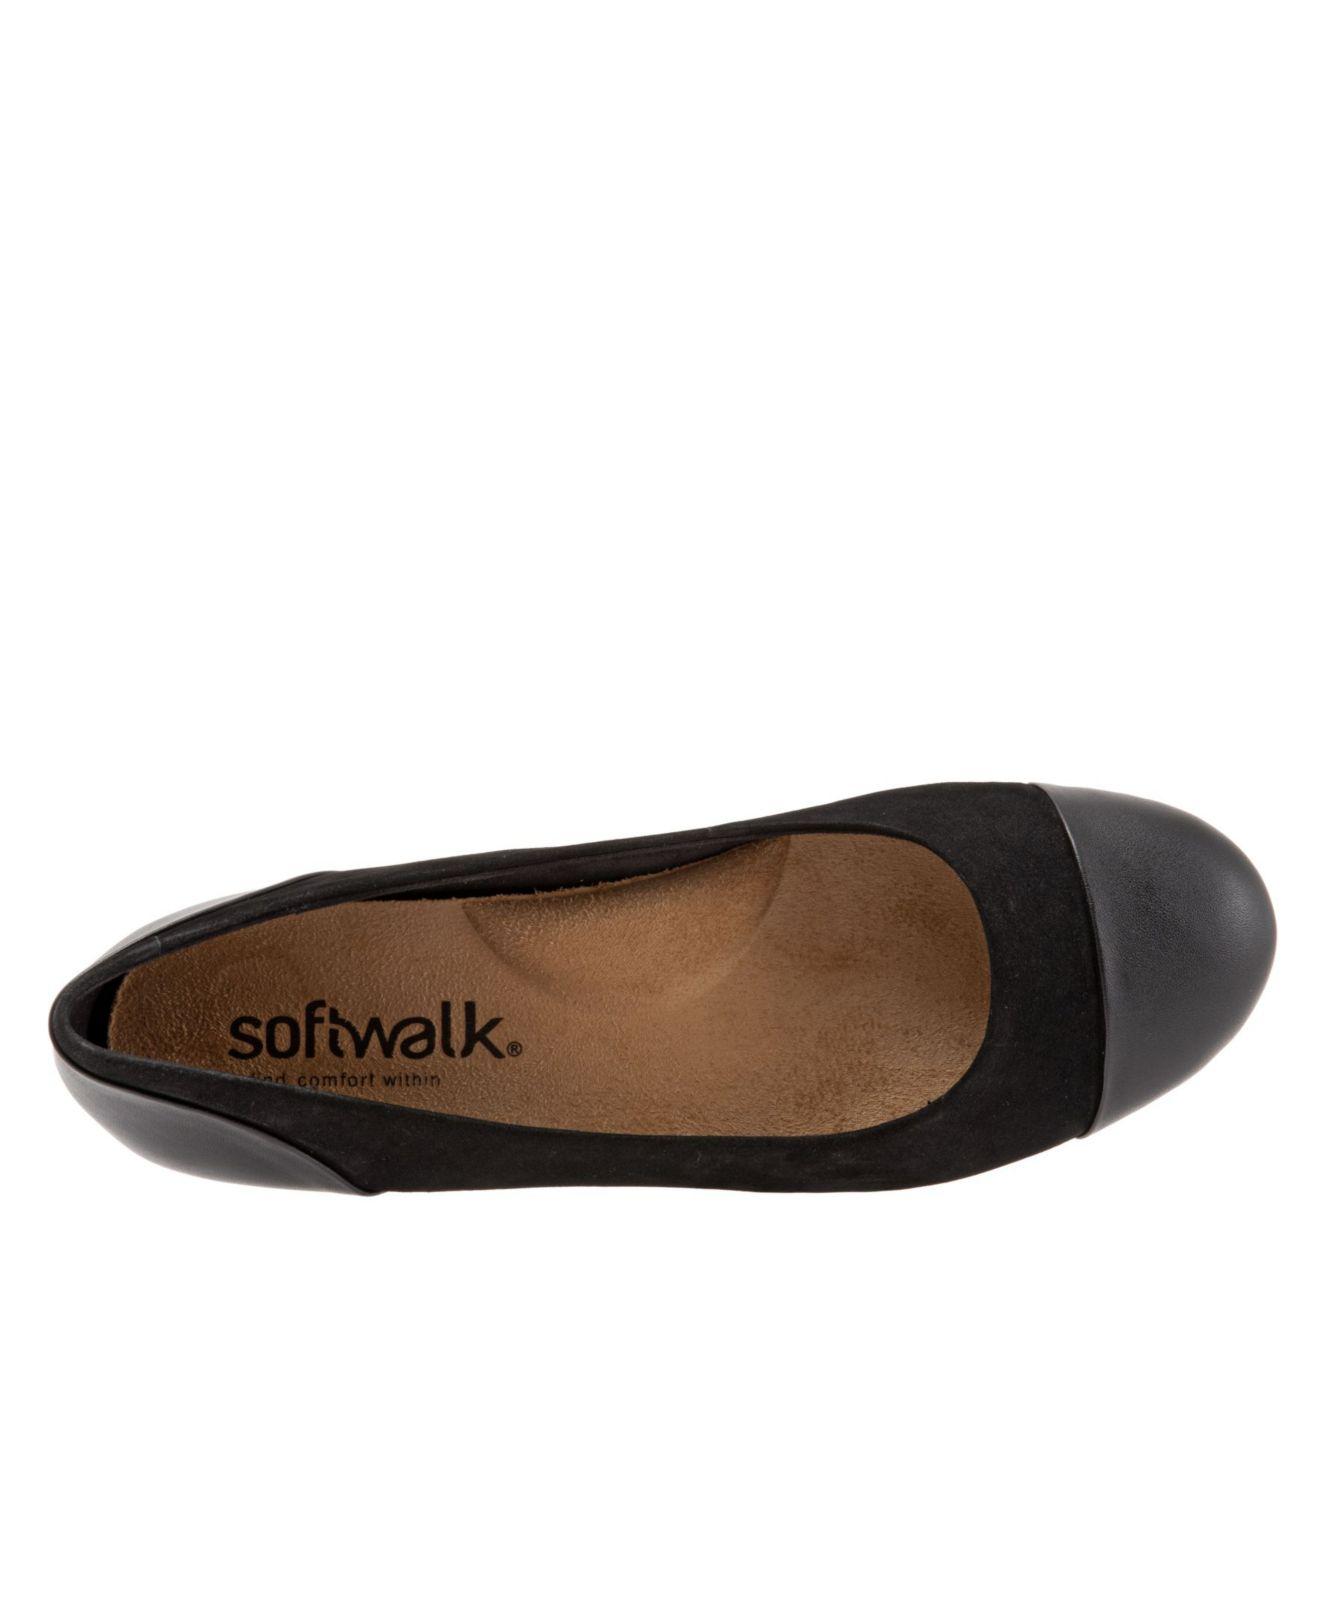 Softwalk Synthetic Sonoma Cap Toe Flats in Black nu (Black) - Lyst